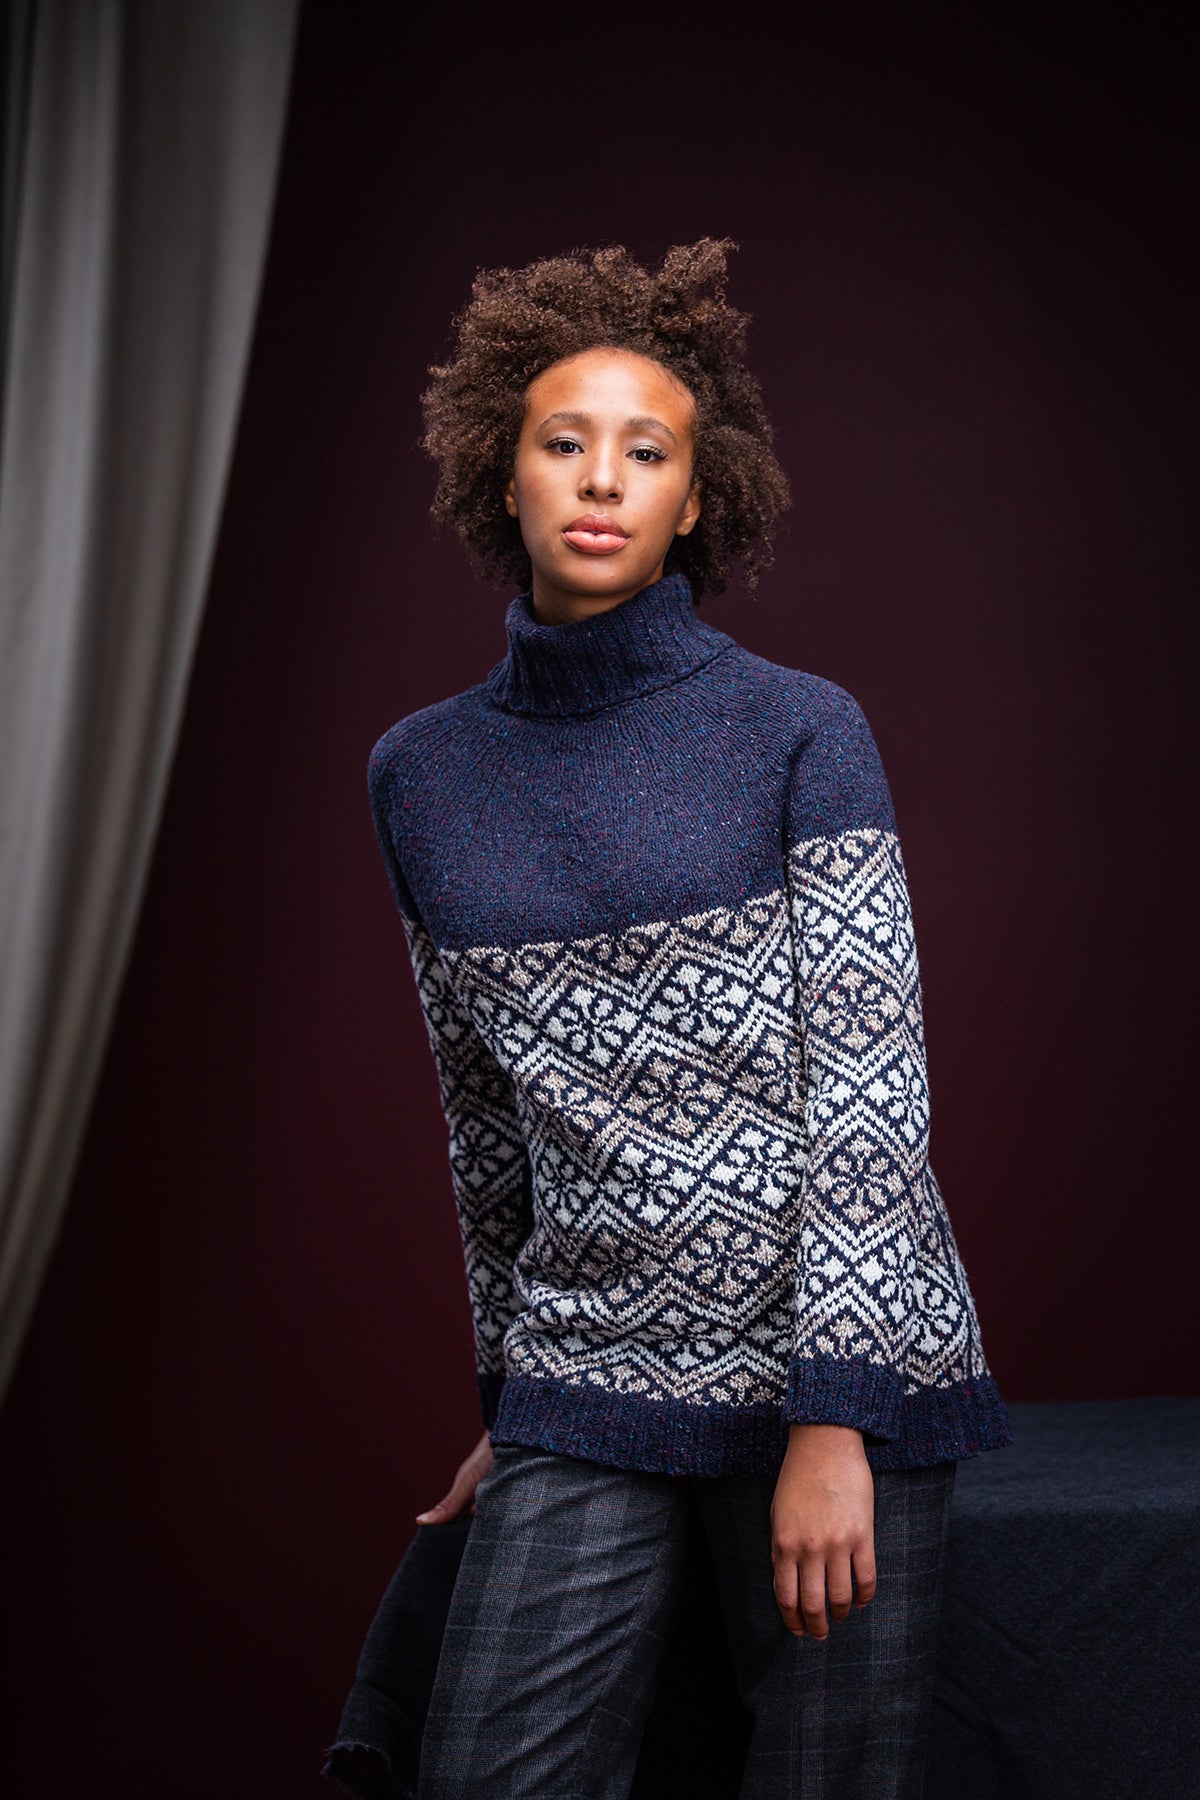 Tuck Pullover, Knitting Pattern by Véronik Avery